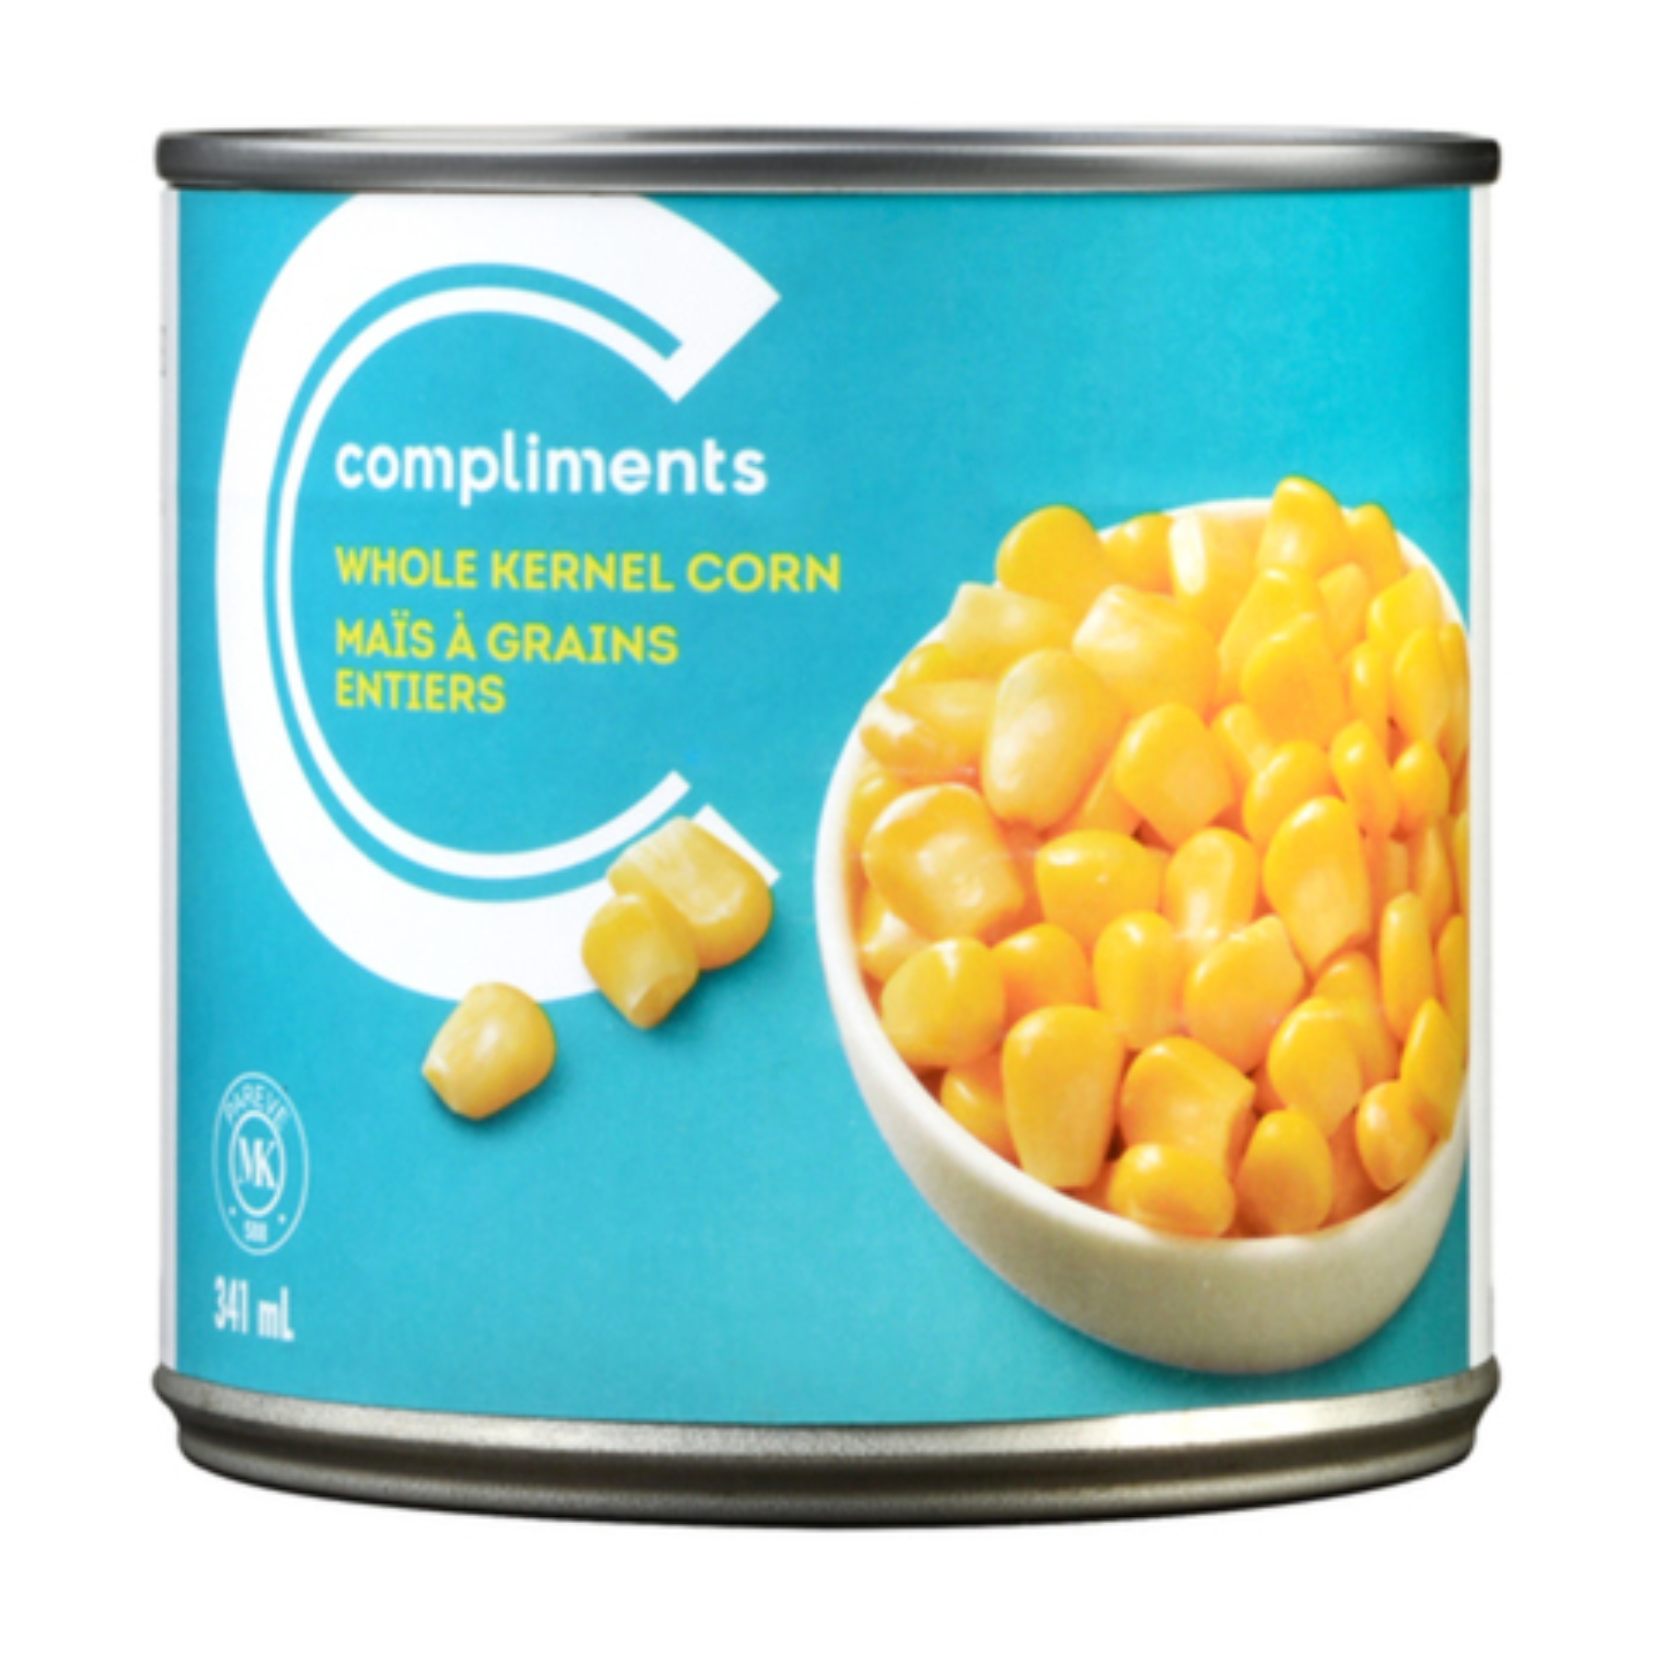 Compliments Whole Kernel Corn 341ml